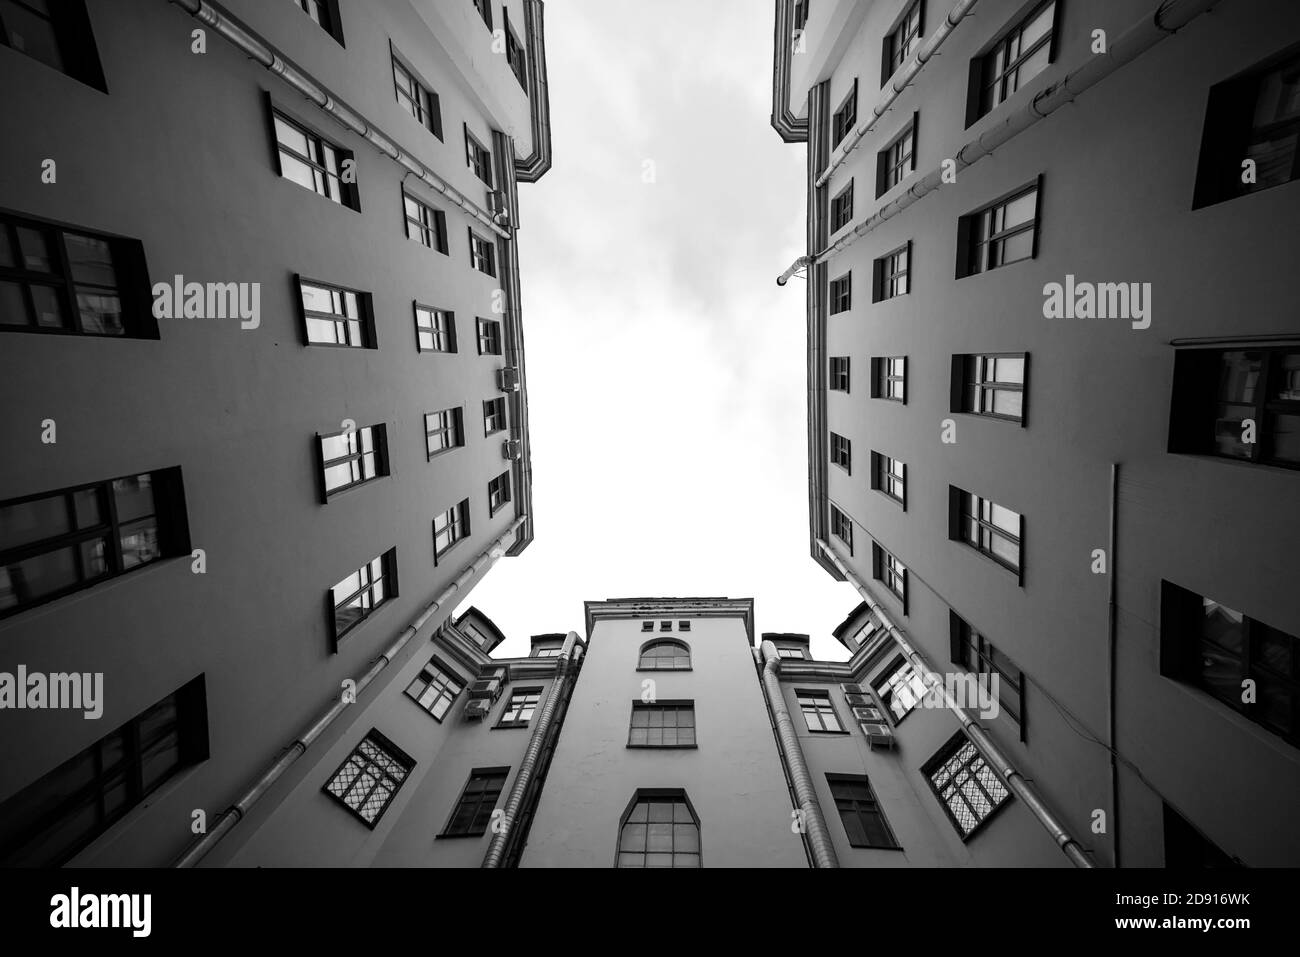 Hof oder Hof gut in Sankt-Petersburg, Russland, schwarz-weiß Bild Stockfoto